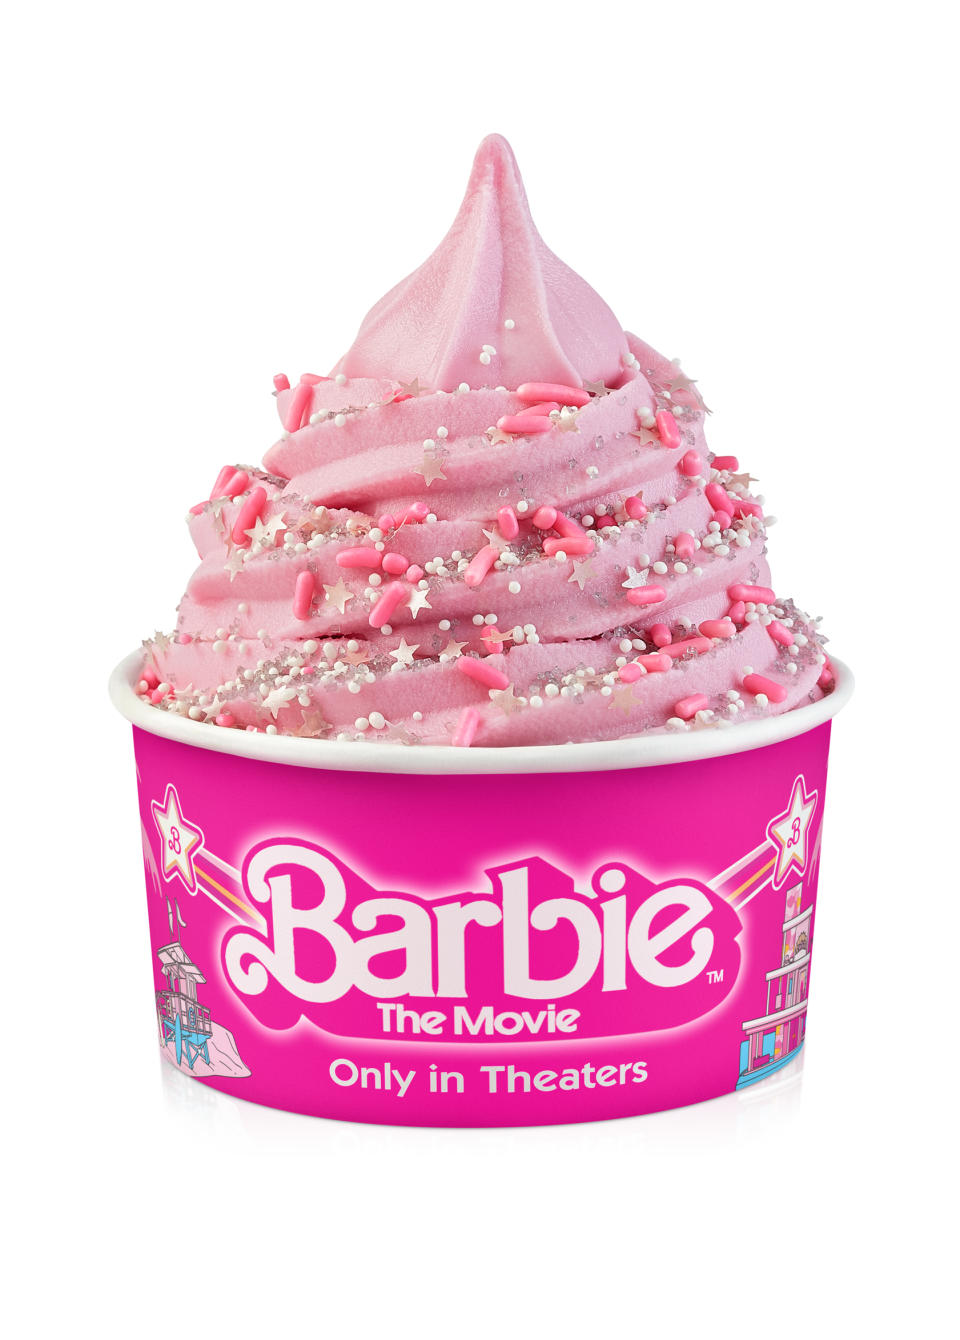  Barbie Land Berry Pink frozen yogurt. (Courtesy Pinkberry)